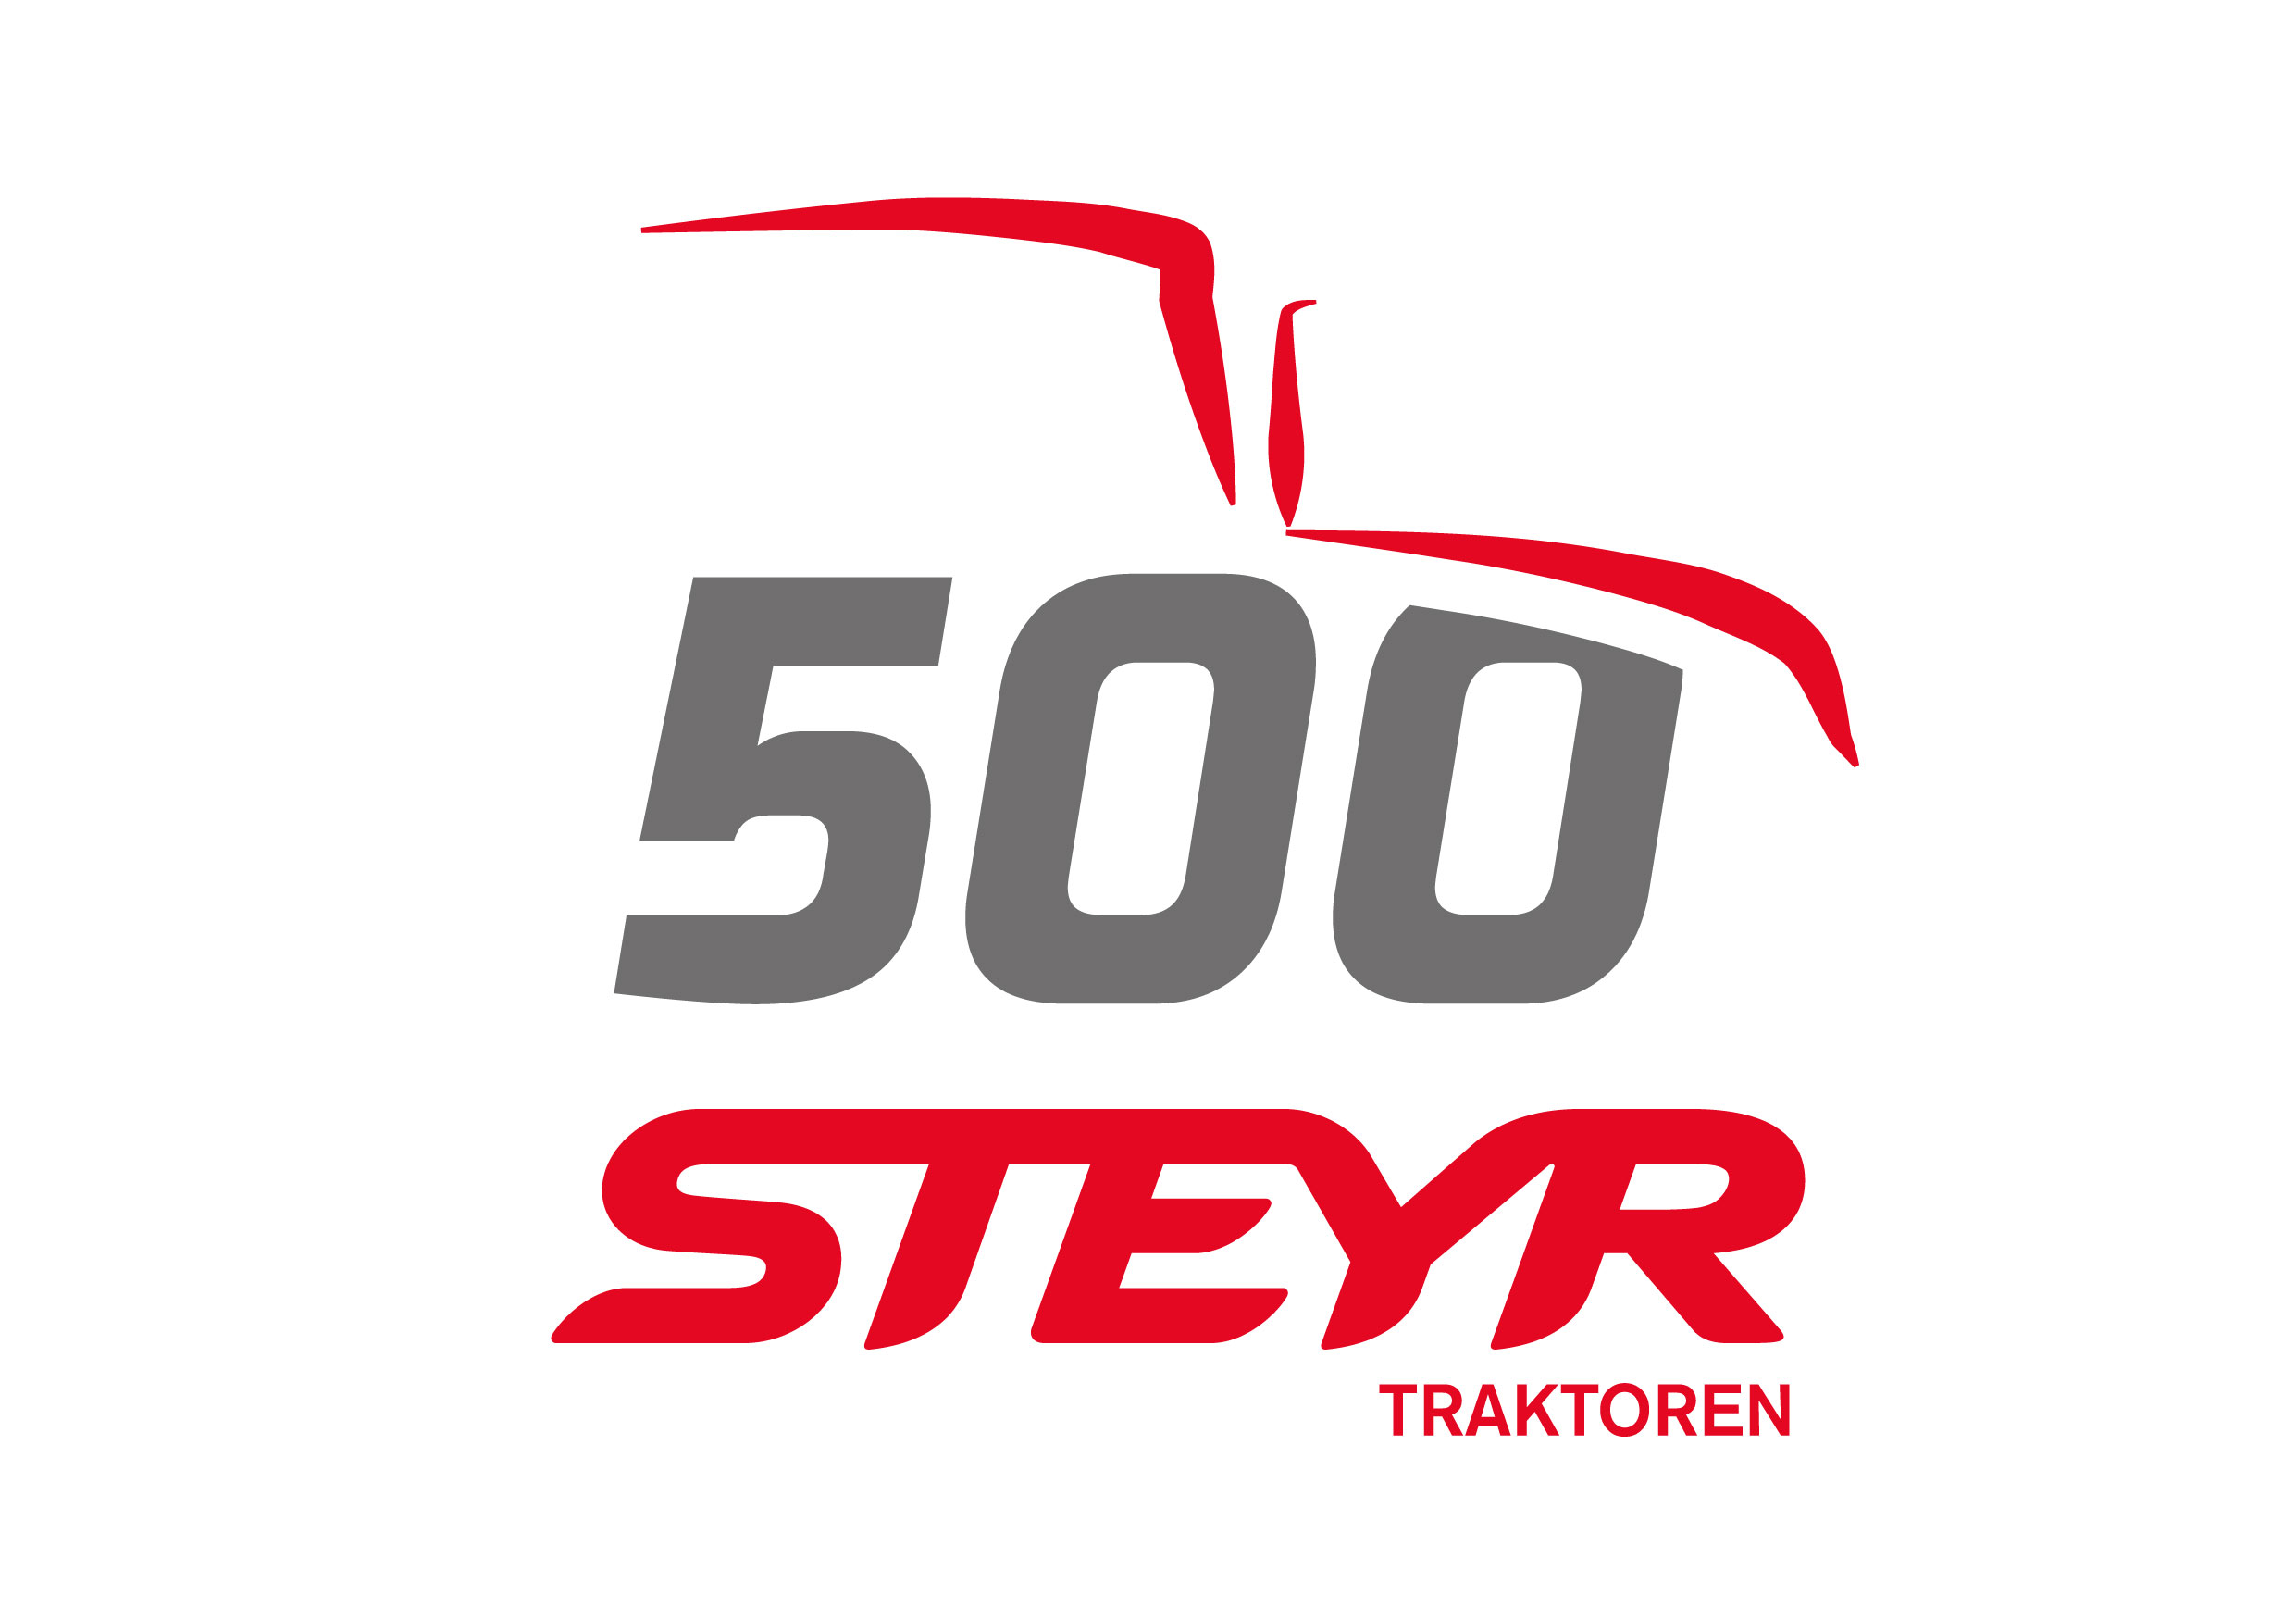 Steyr_traktoren_logo_500.jpg